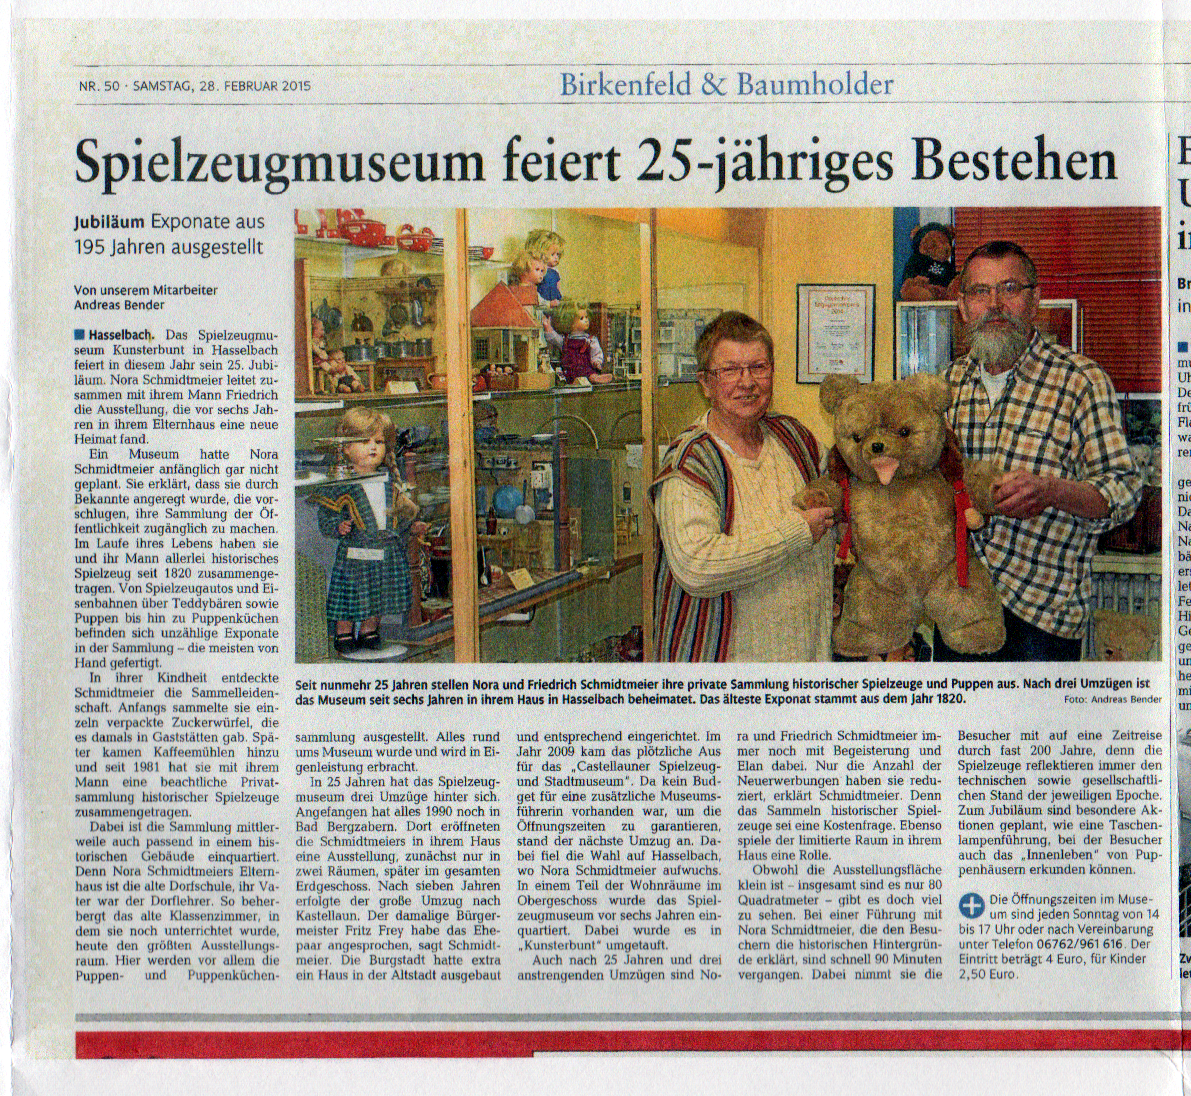 Spielzeugmuseum-Kunsterbunt Presse,